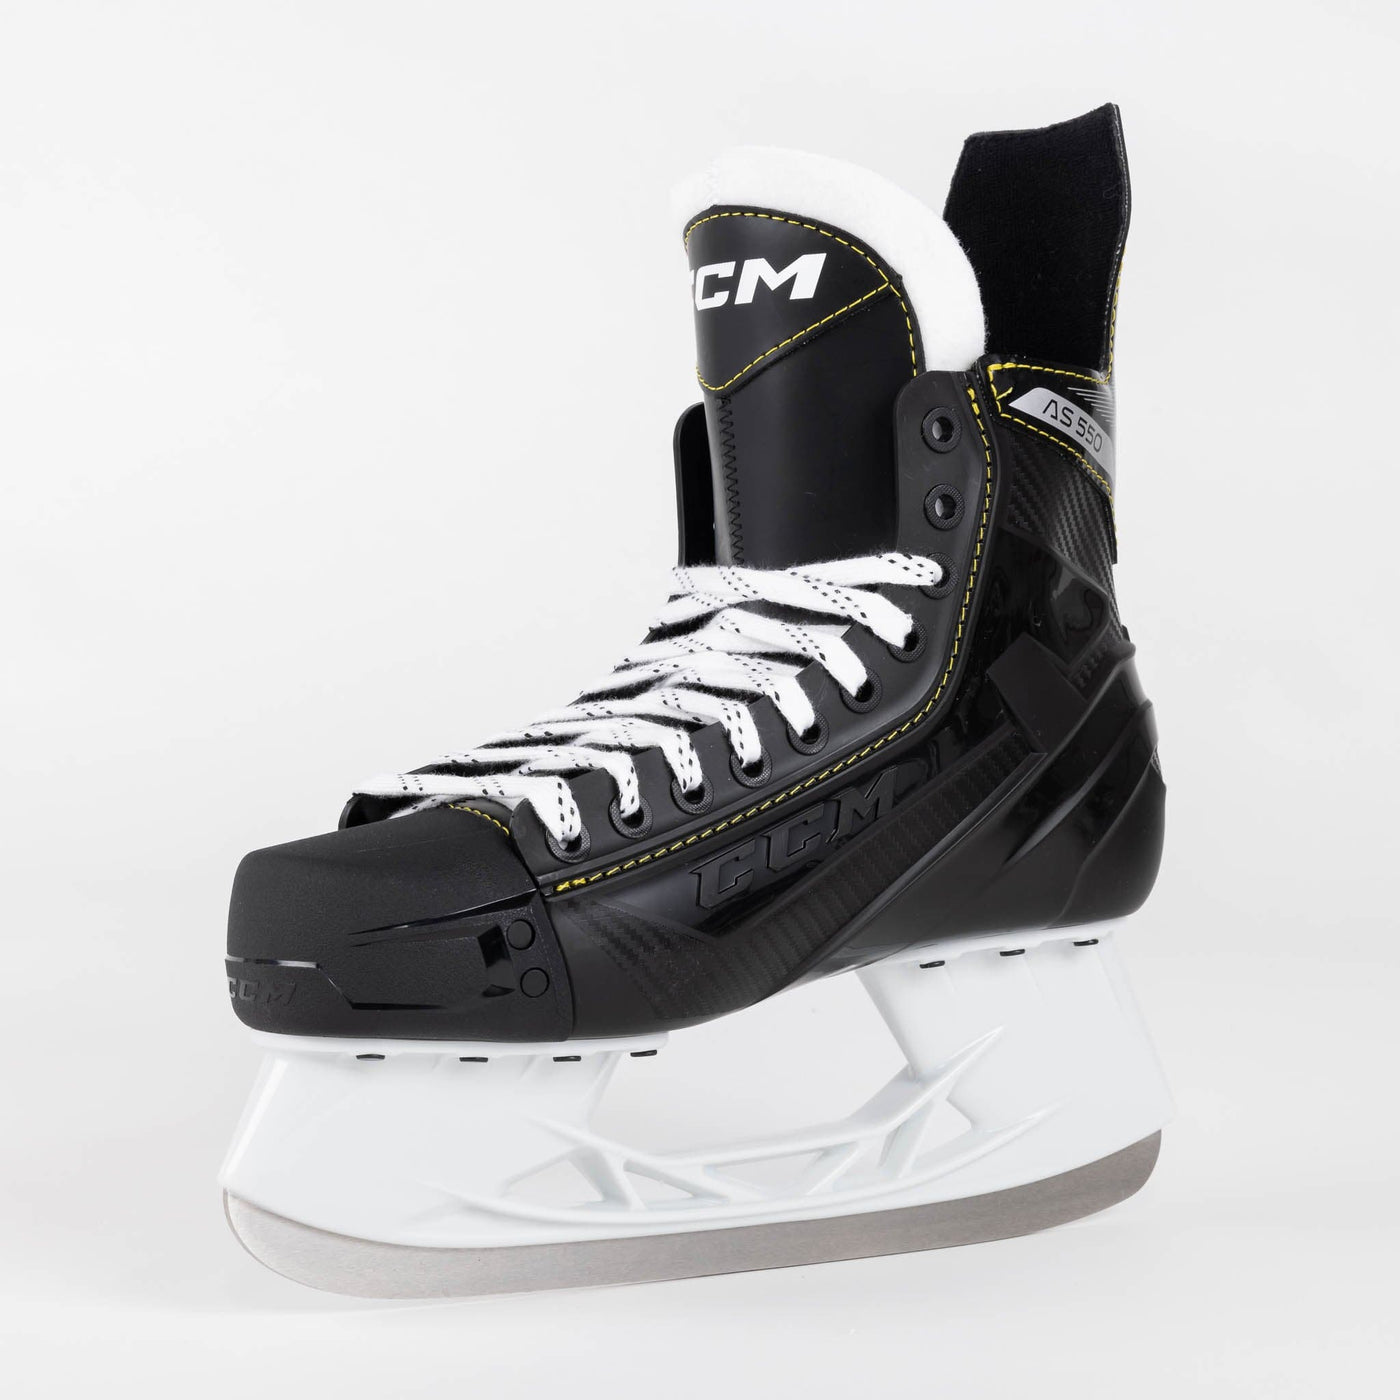 CCM Tacks AS550 Senior Hockey Skates - The Hockey Shop Source For Sports